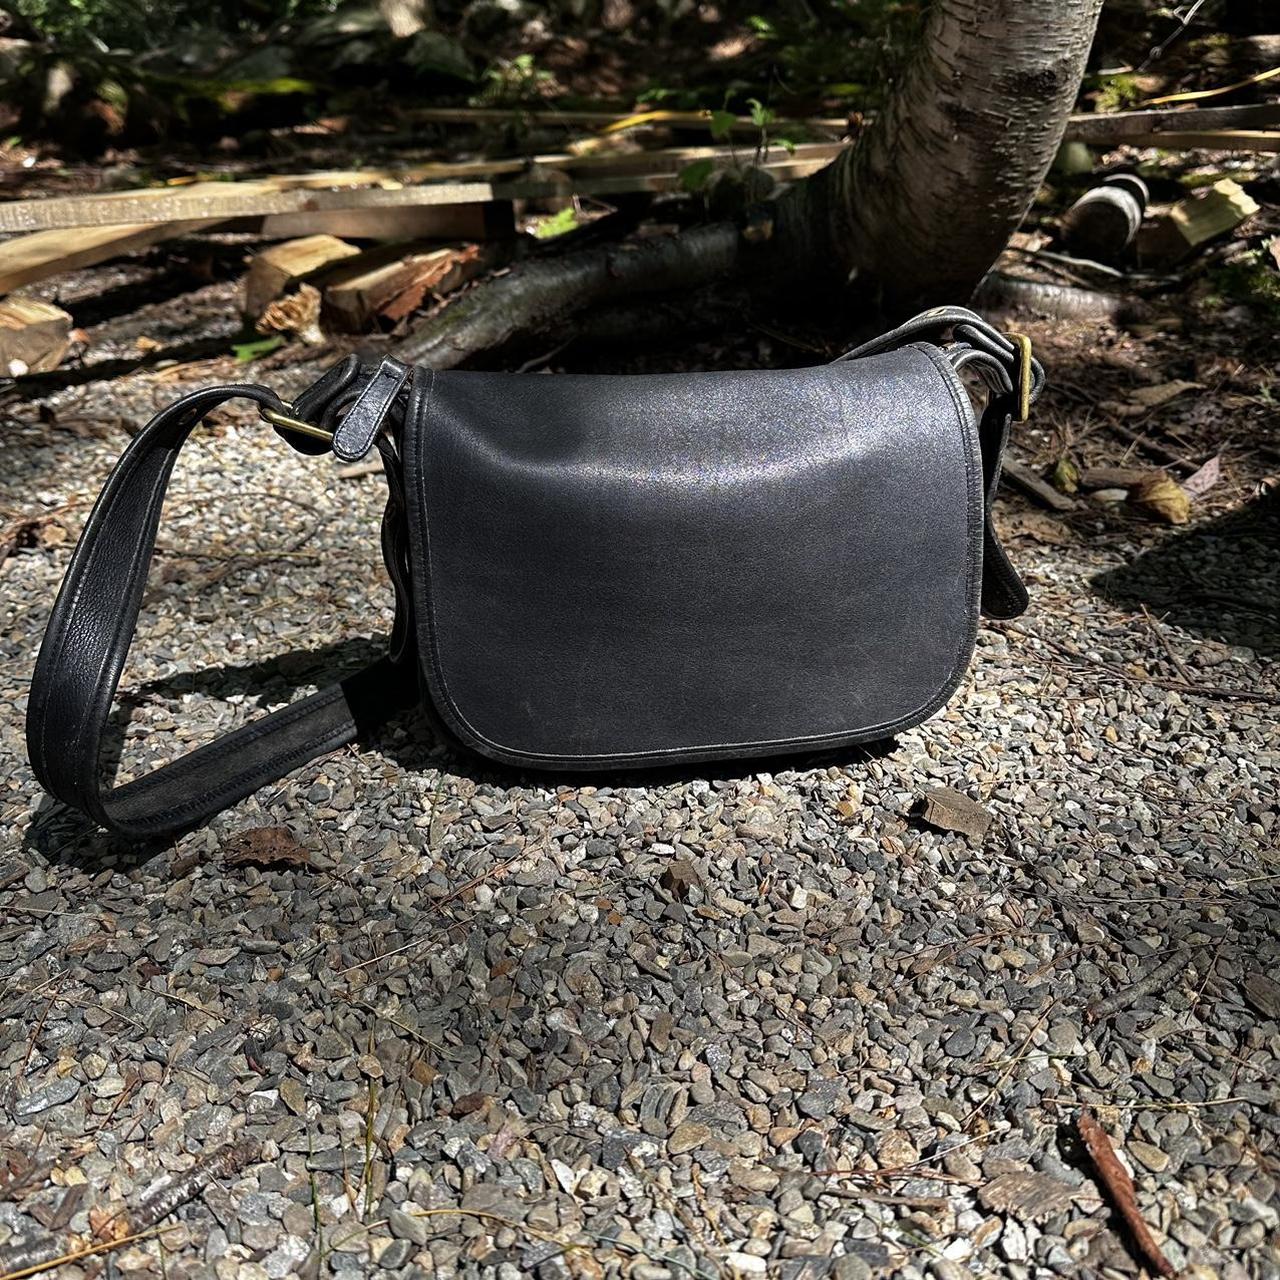 black leather vintage coach purse with adjustable crossbody strap